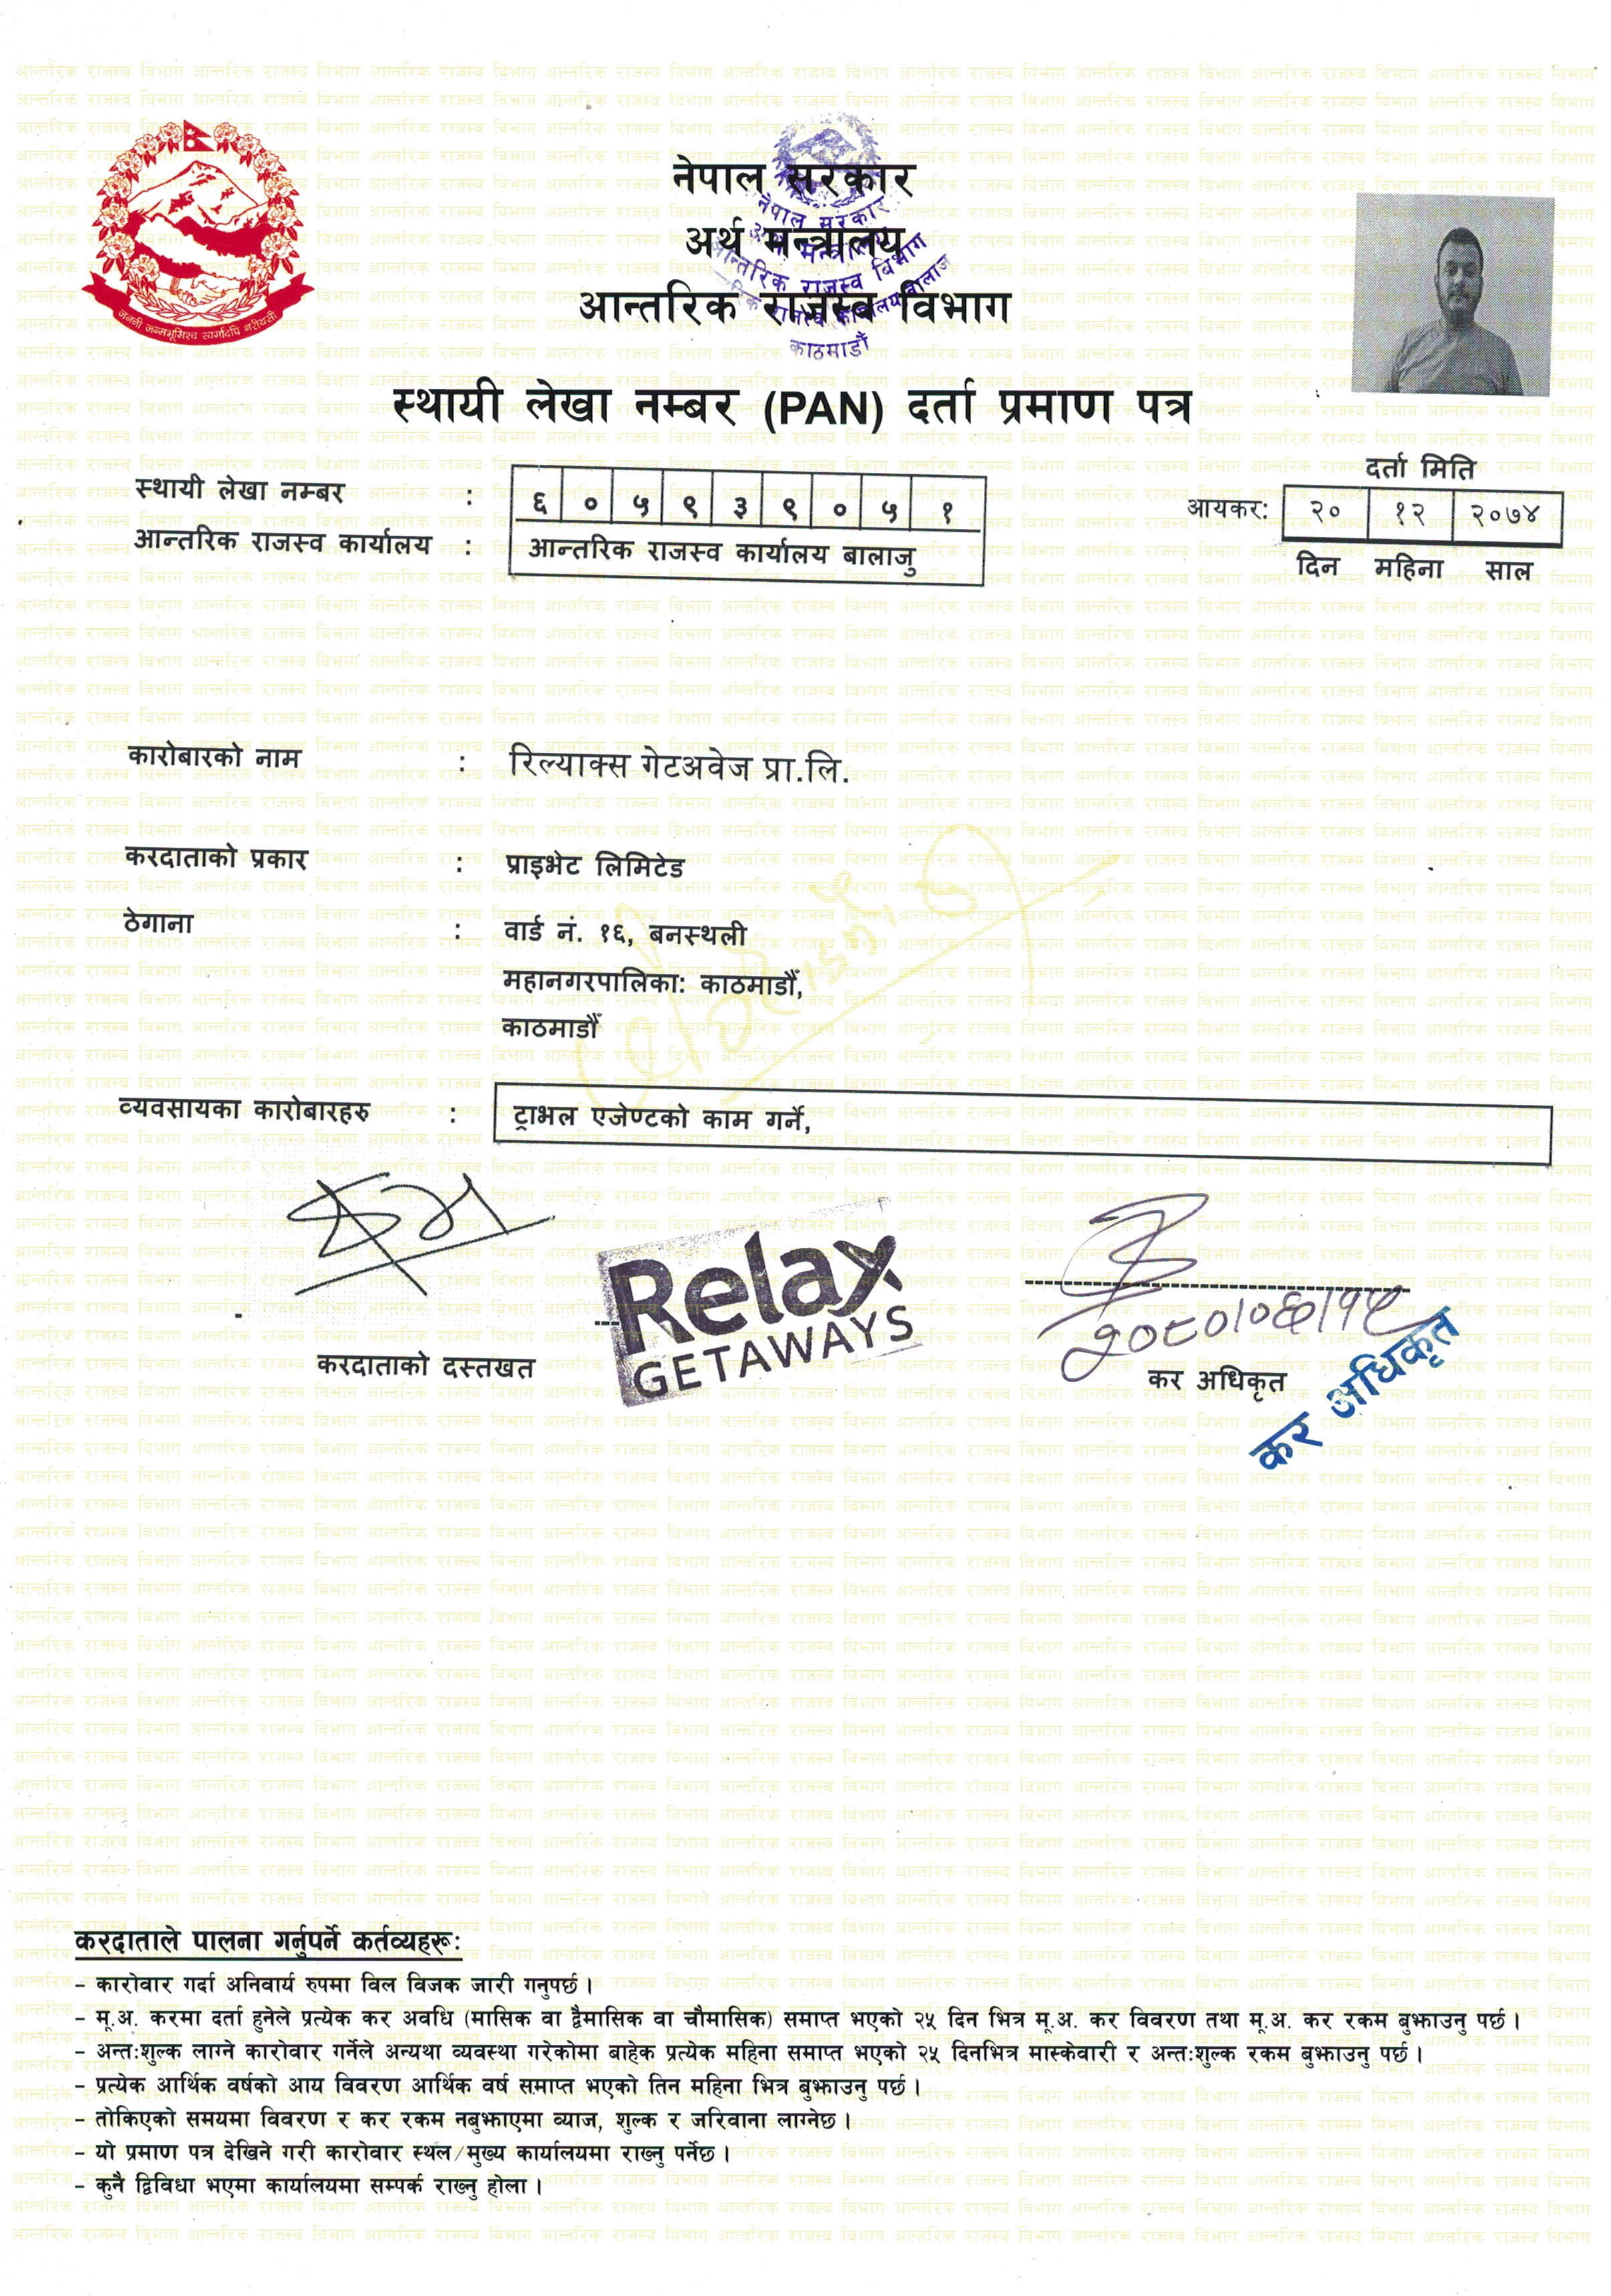 Inland Revenue Department registration number (PAN with VAT registration Number)